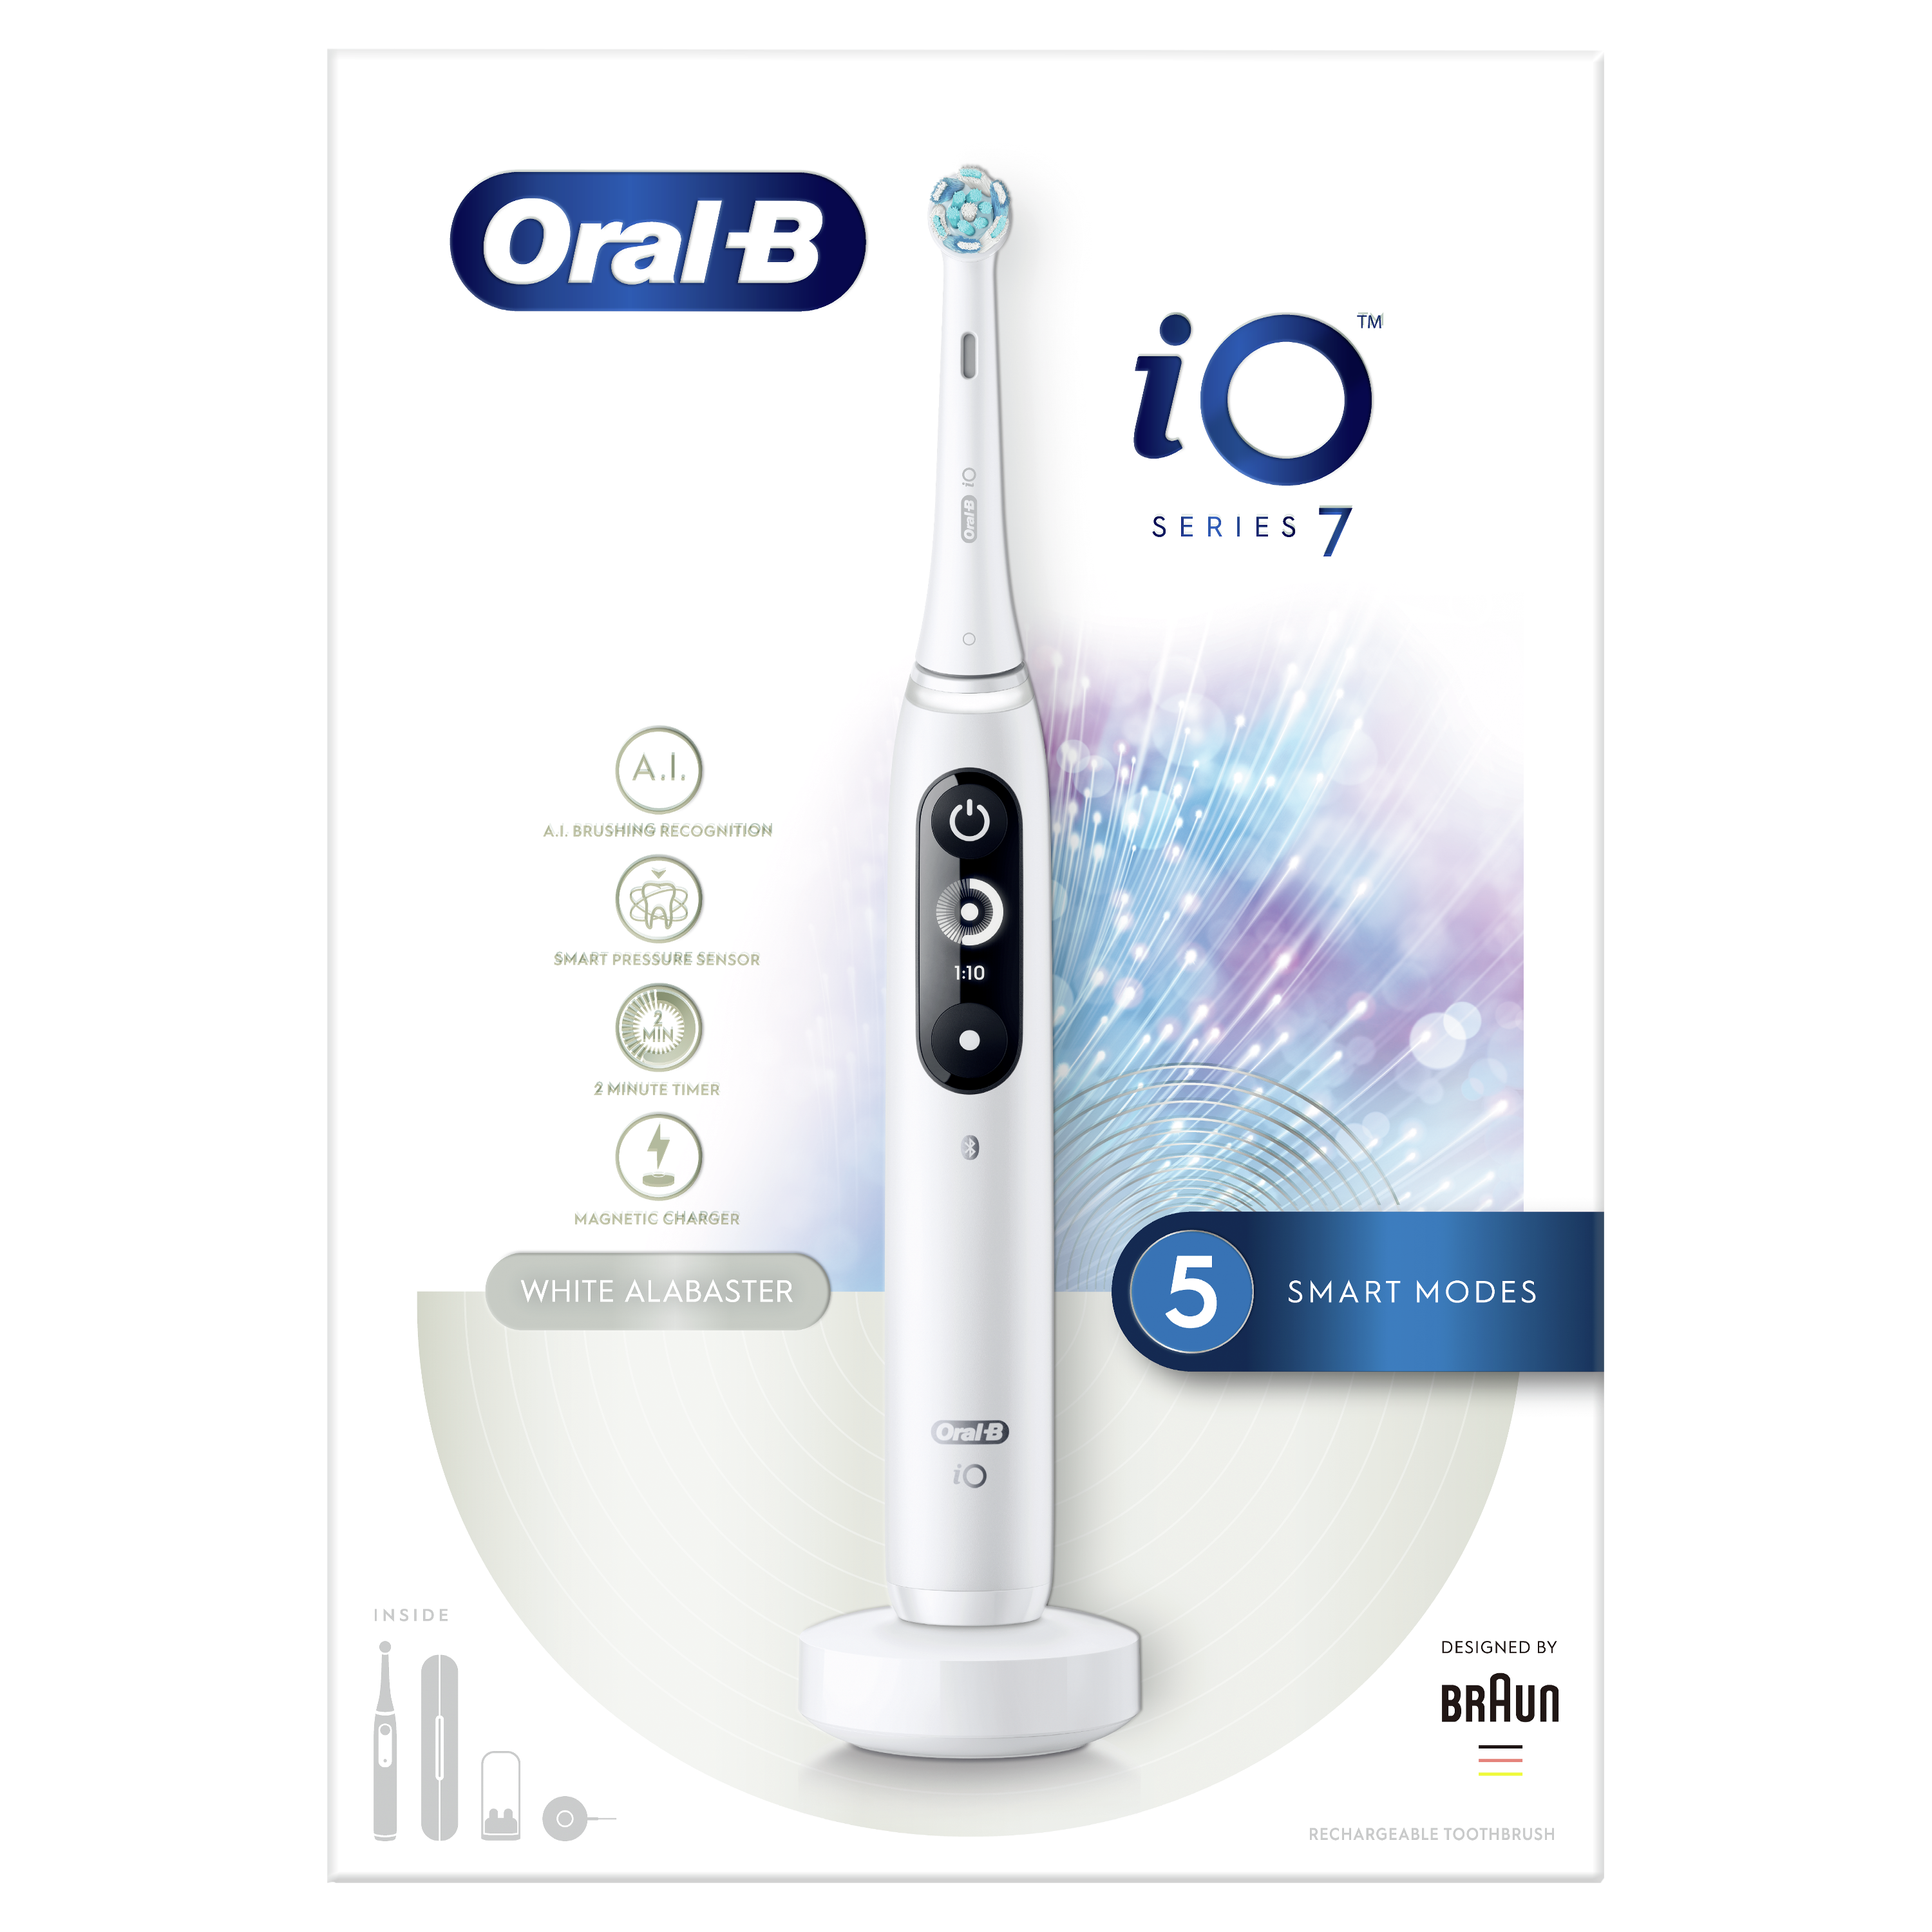 Електрична зубна щітка Oral-B iO Series 7 iOM7.1A1.1BD 3758 White alabaster - фото 3